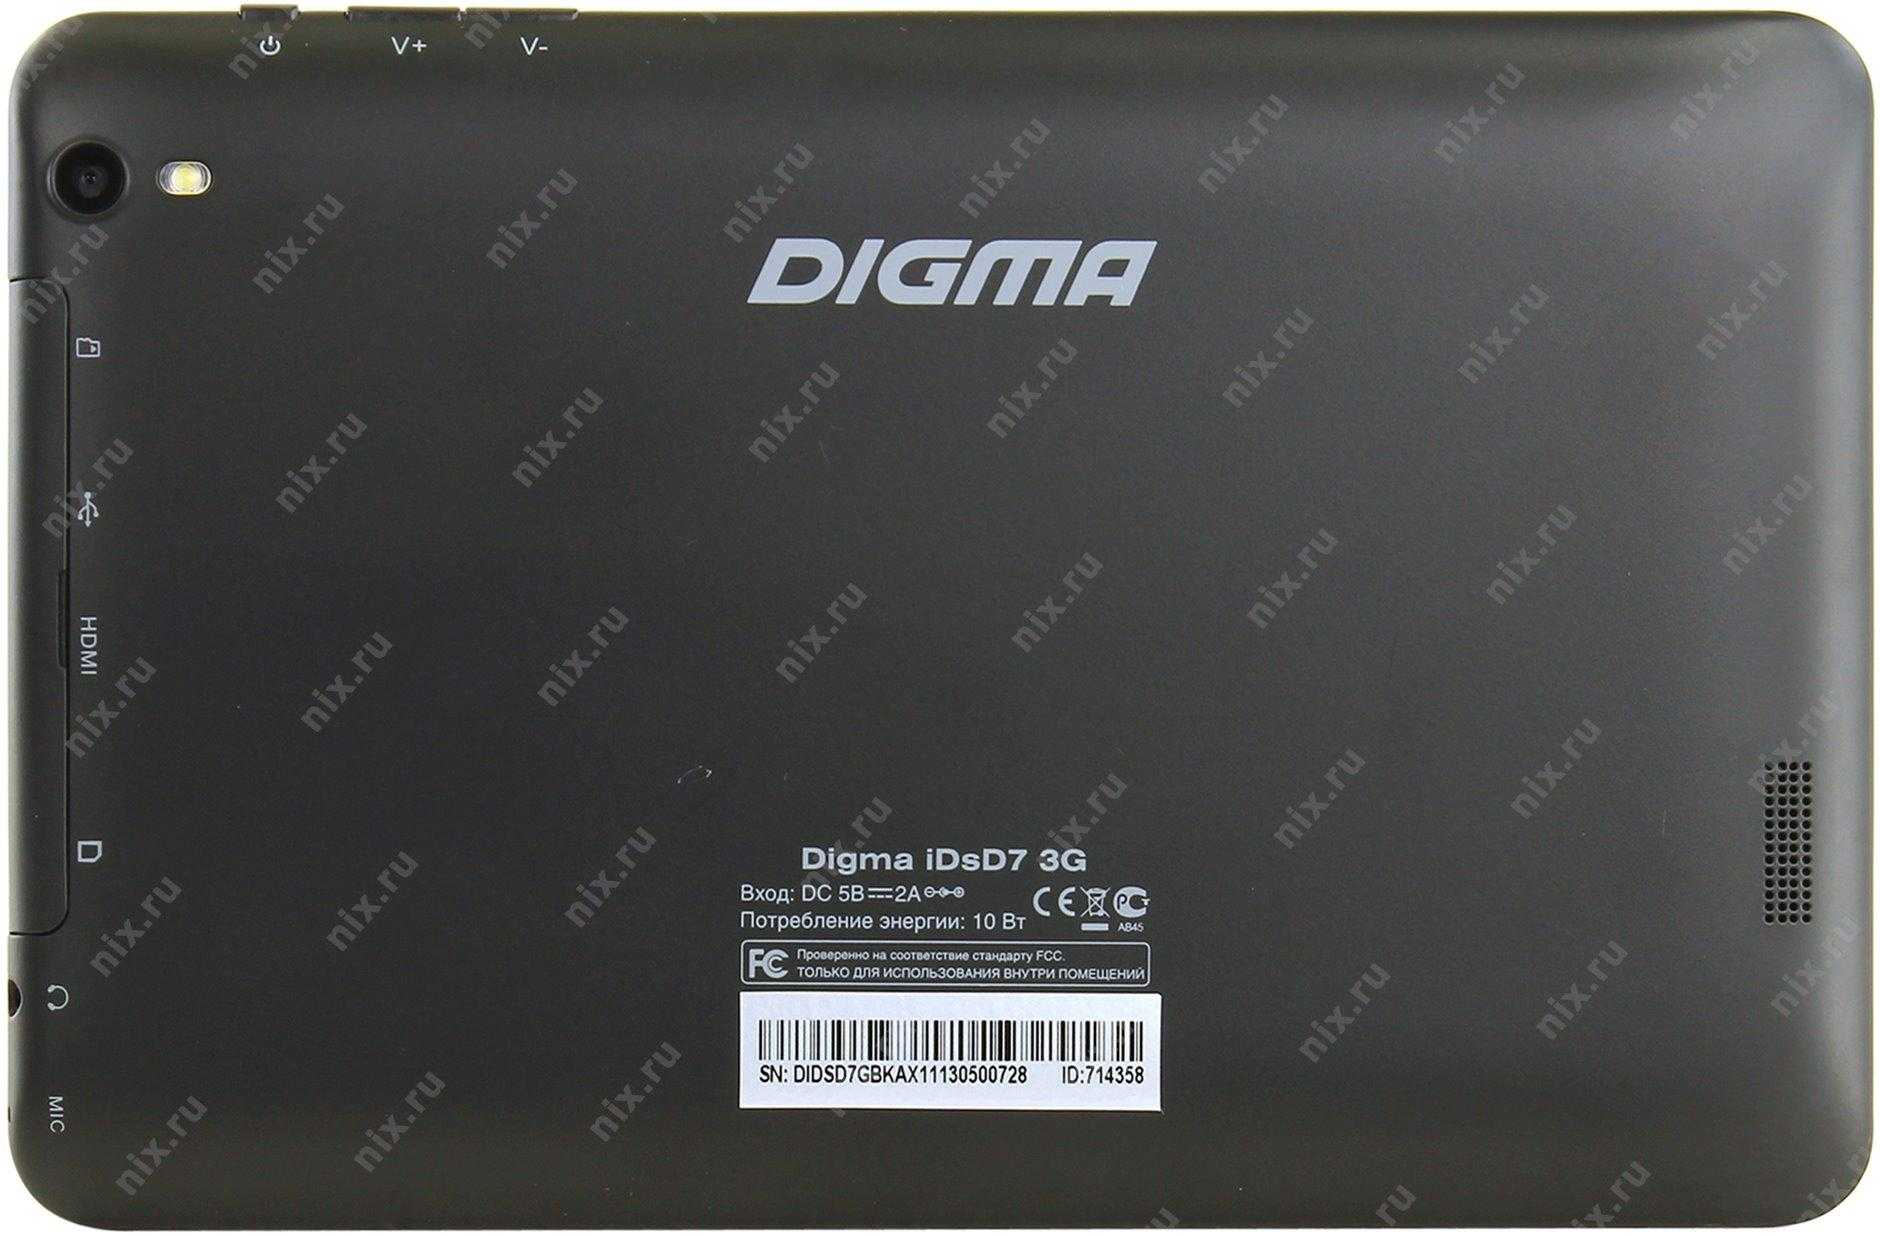 Digma 1800f 4g. Digma idsd7. Планшет Digma Pro 1800f 4g. Digma 10.7 3g Разор. Digma планшет 26 дюймов.